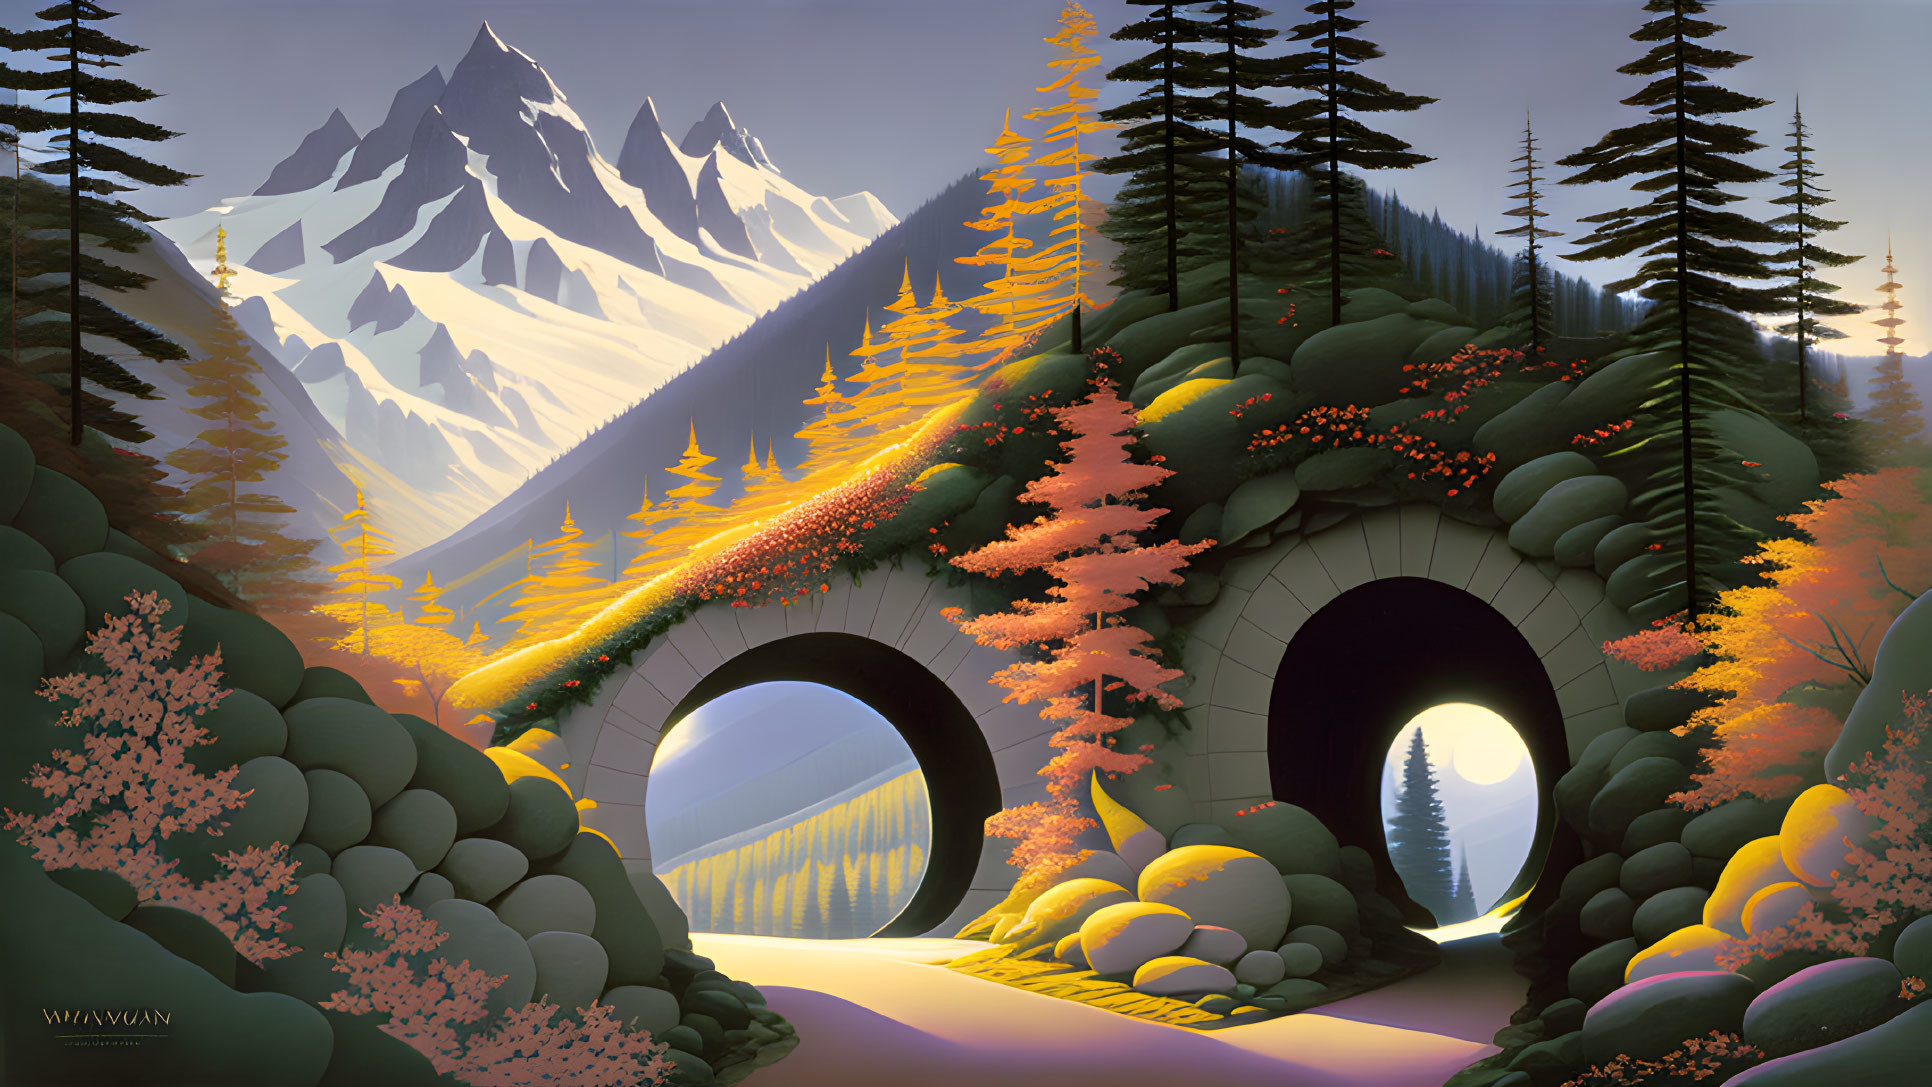 2 Portals, Fantasy Mountain Tunnels